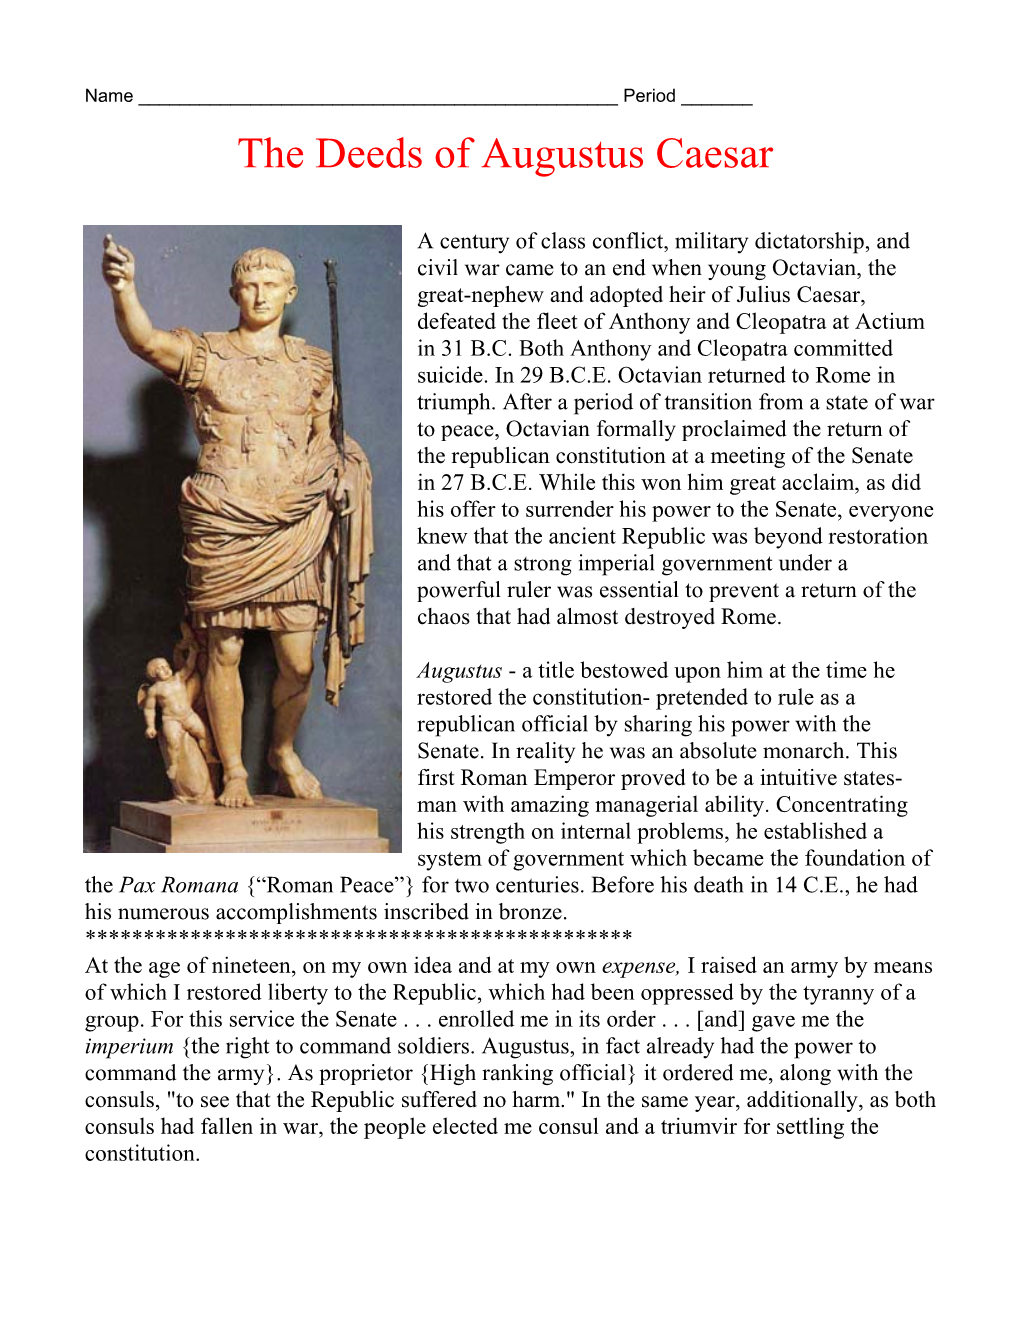 The Deeds of Augustus Caesar